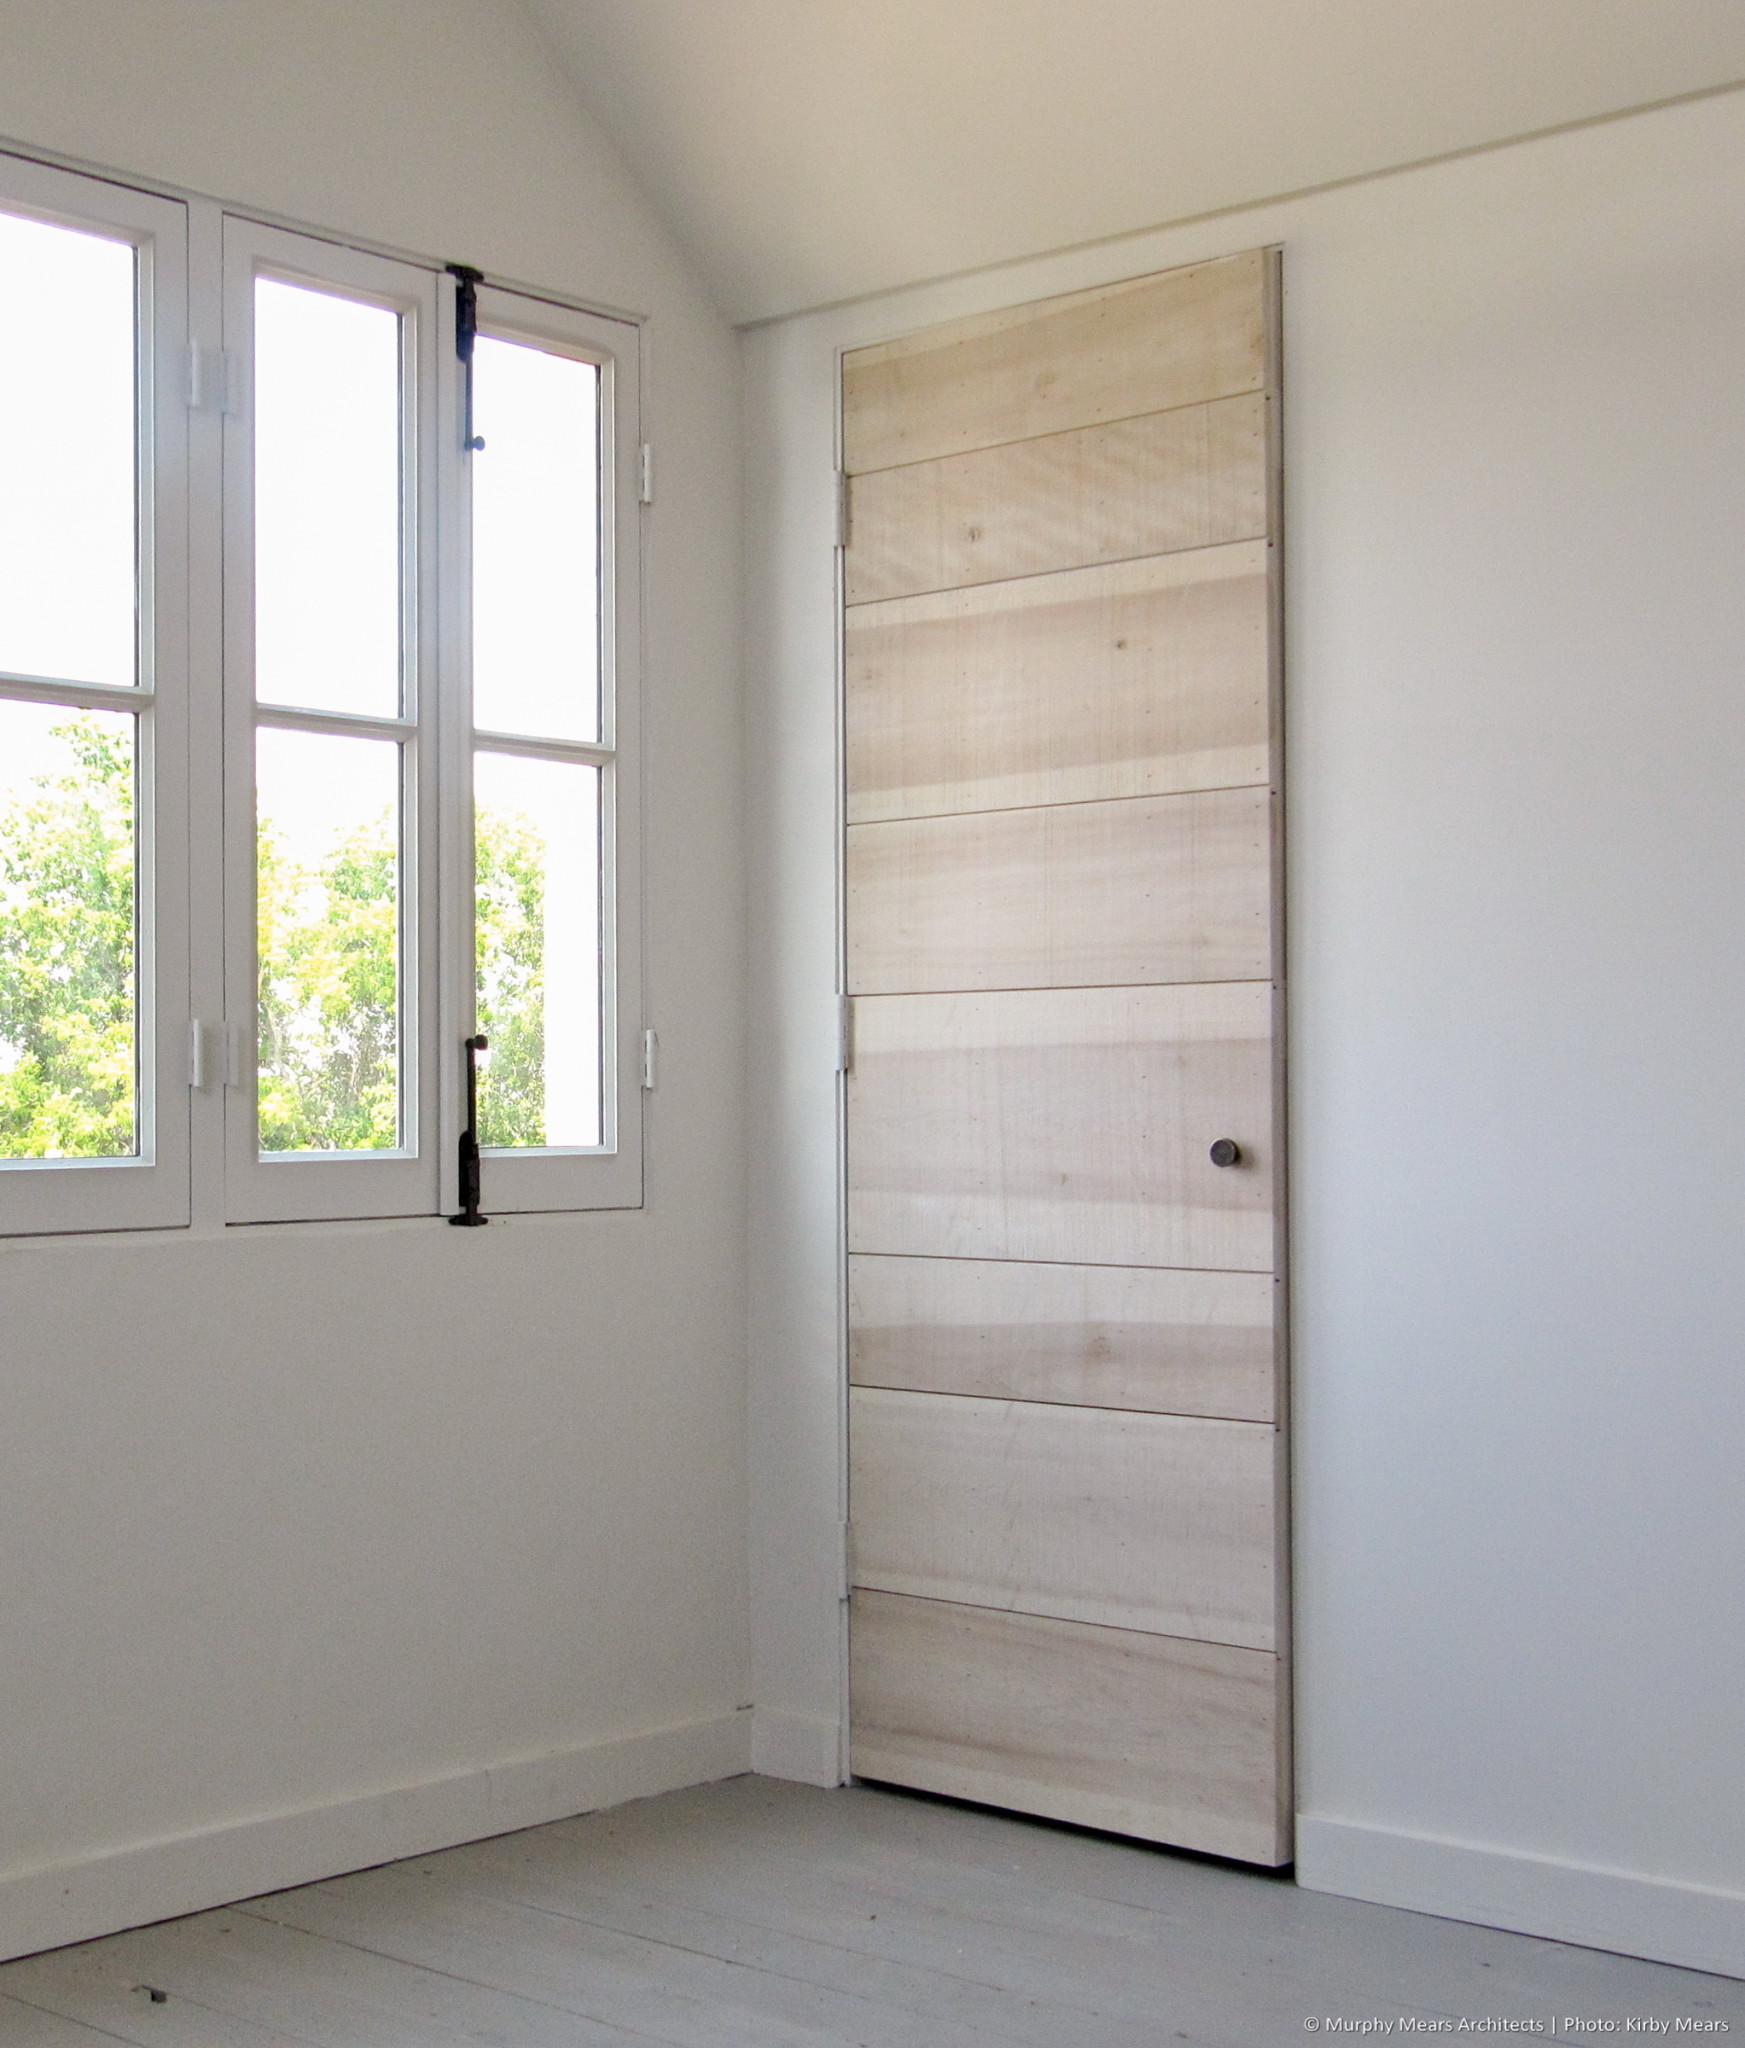 Typical interior door: custom flush wood plank construction.